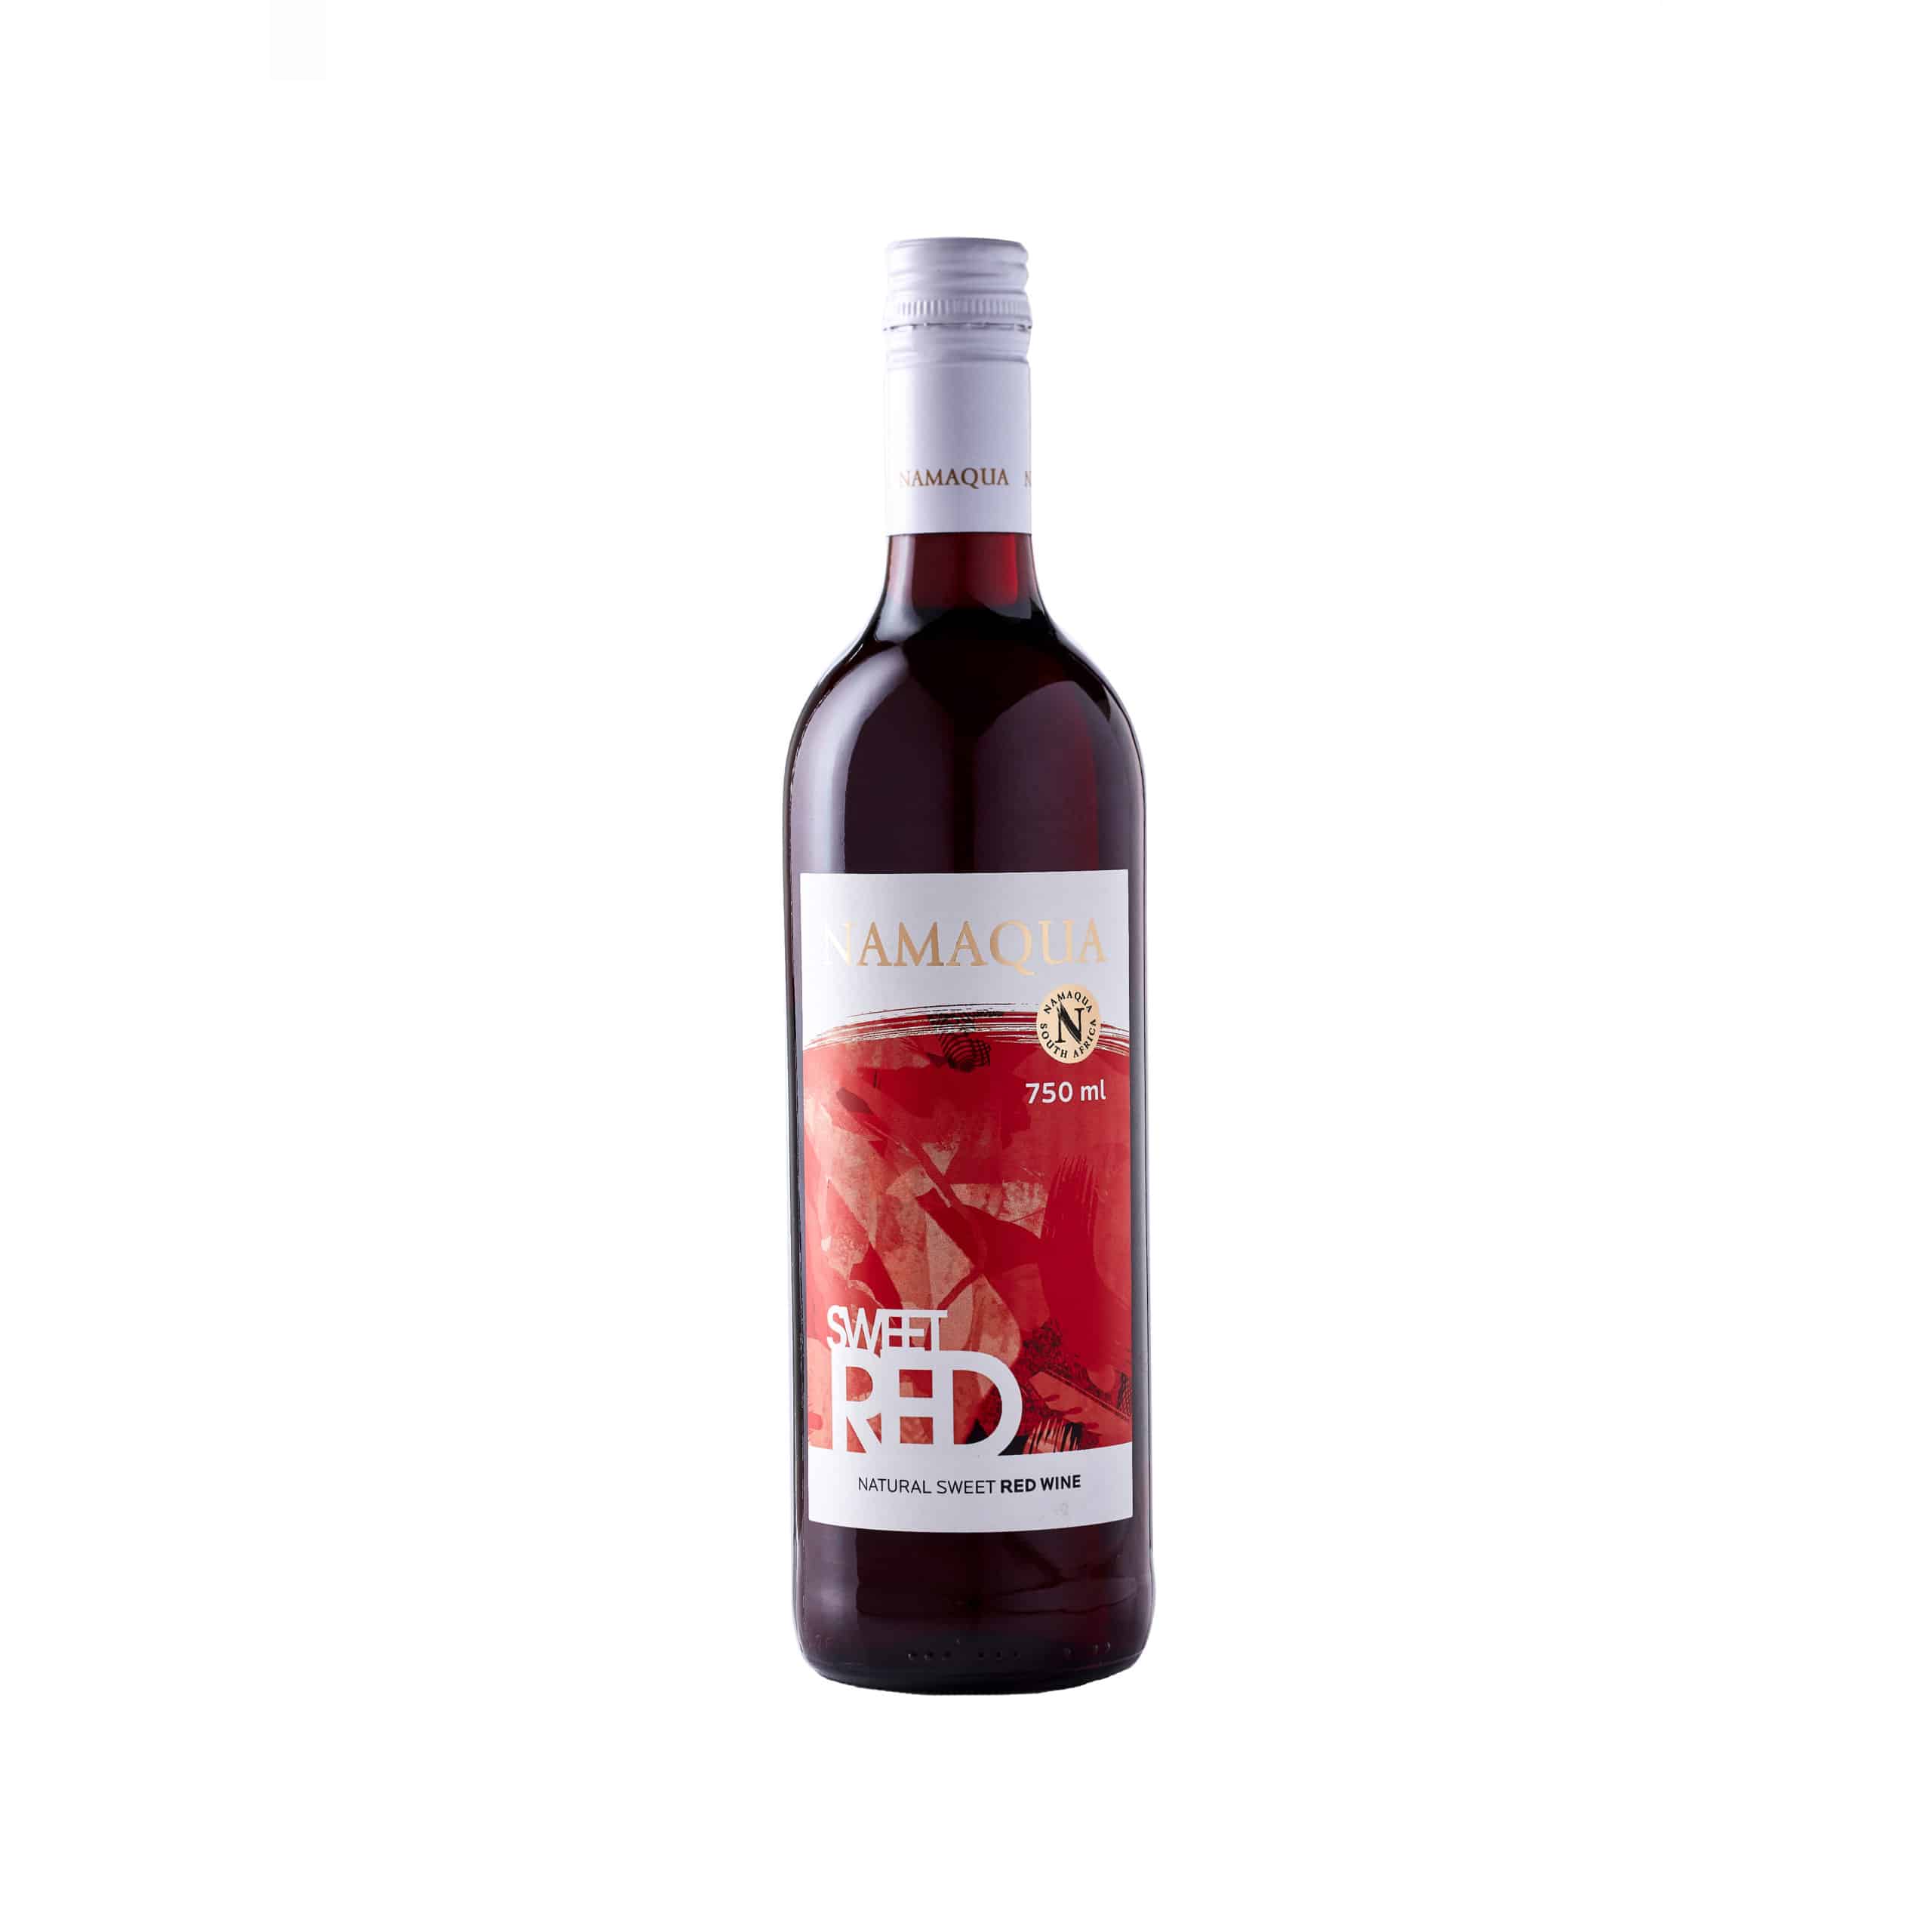 NAMAQUA SWEET RED 750(ml) WINE